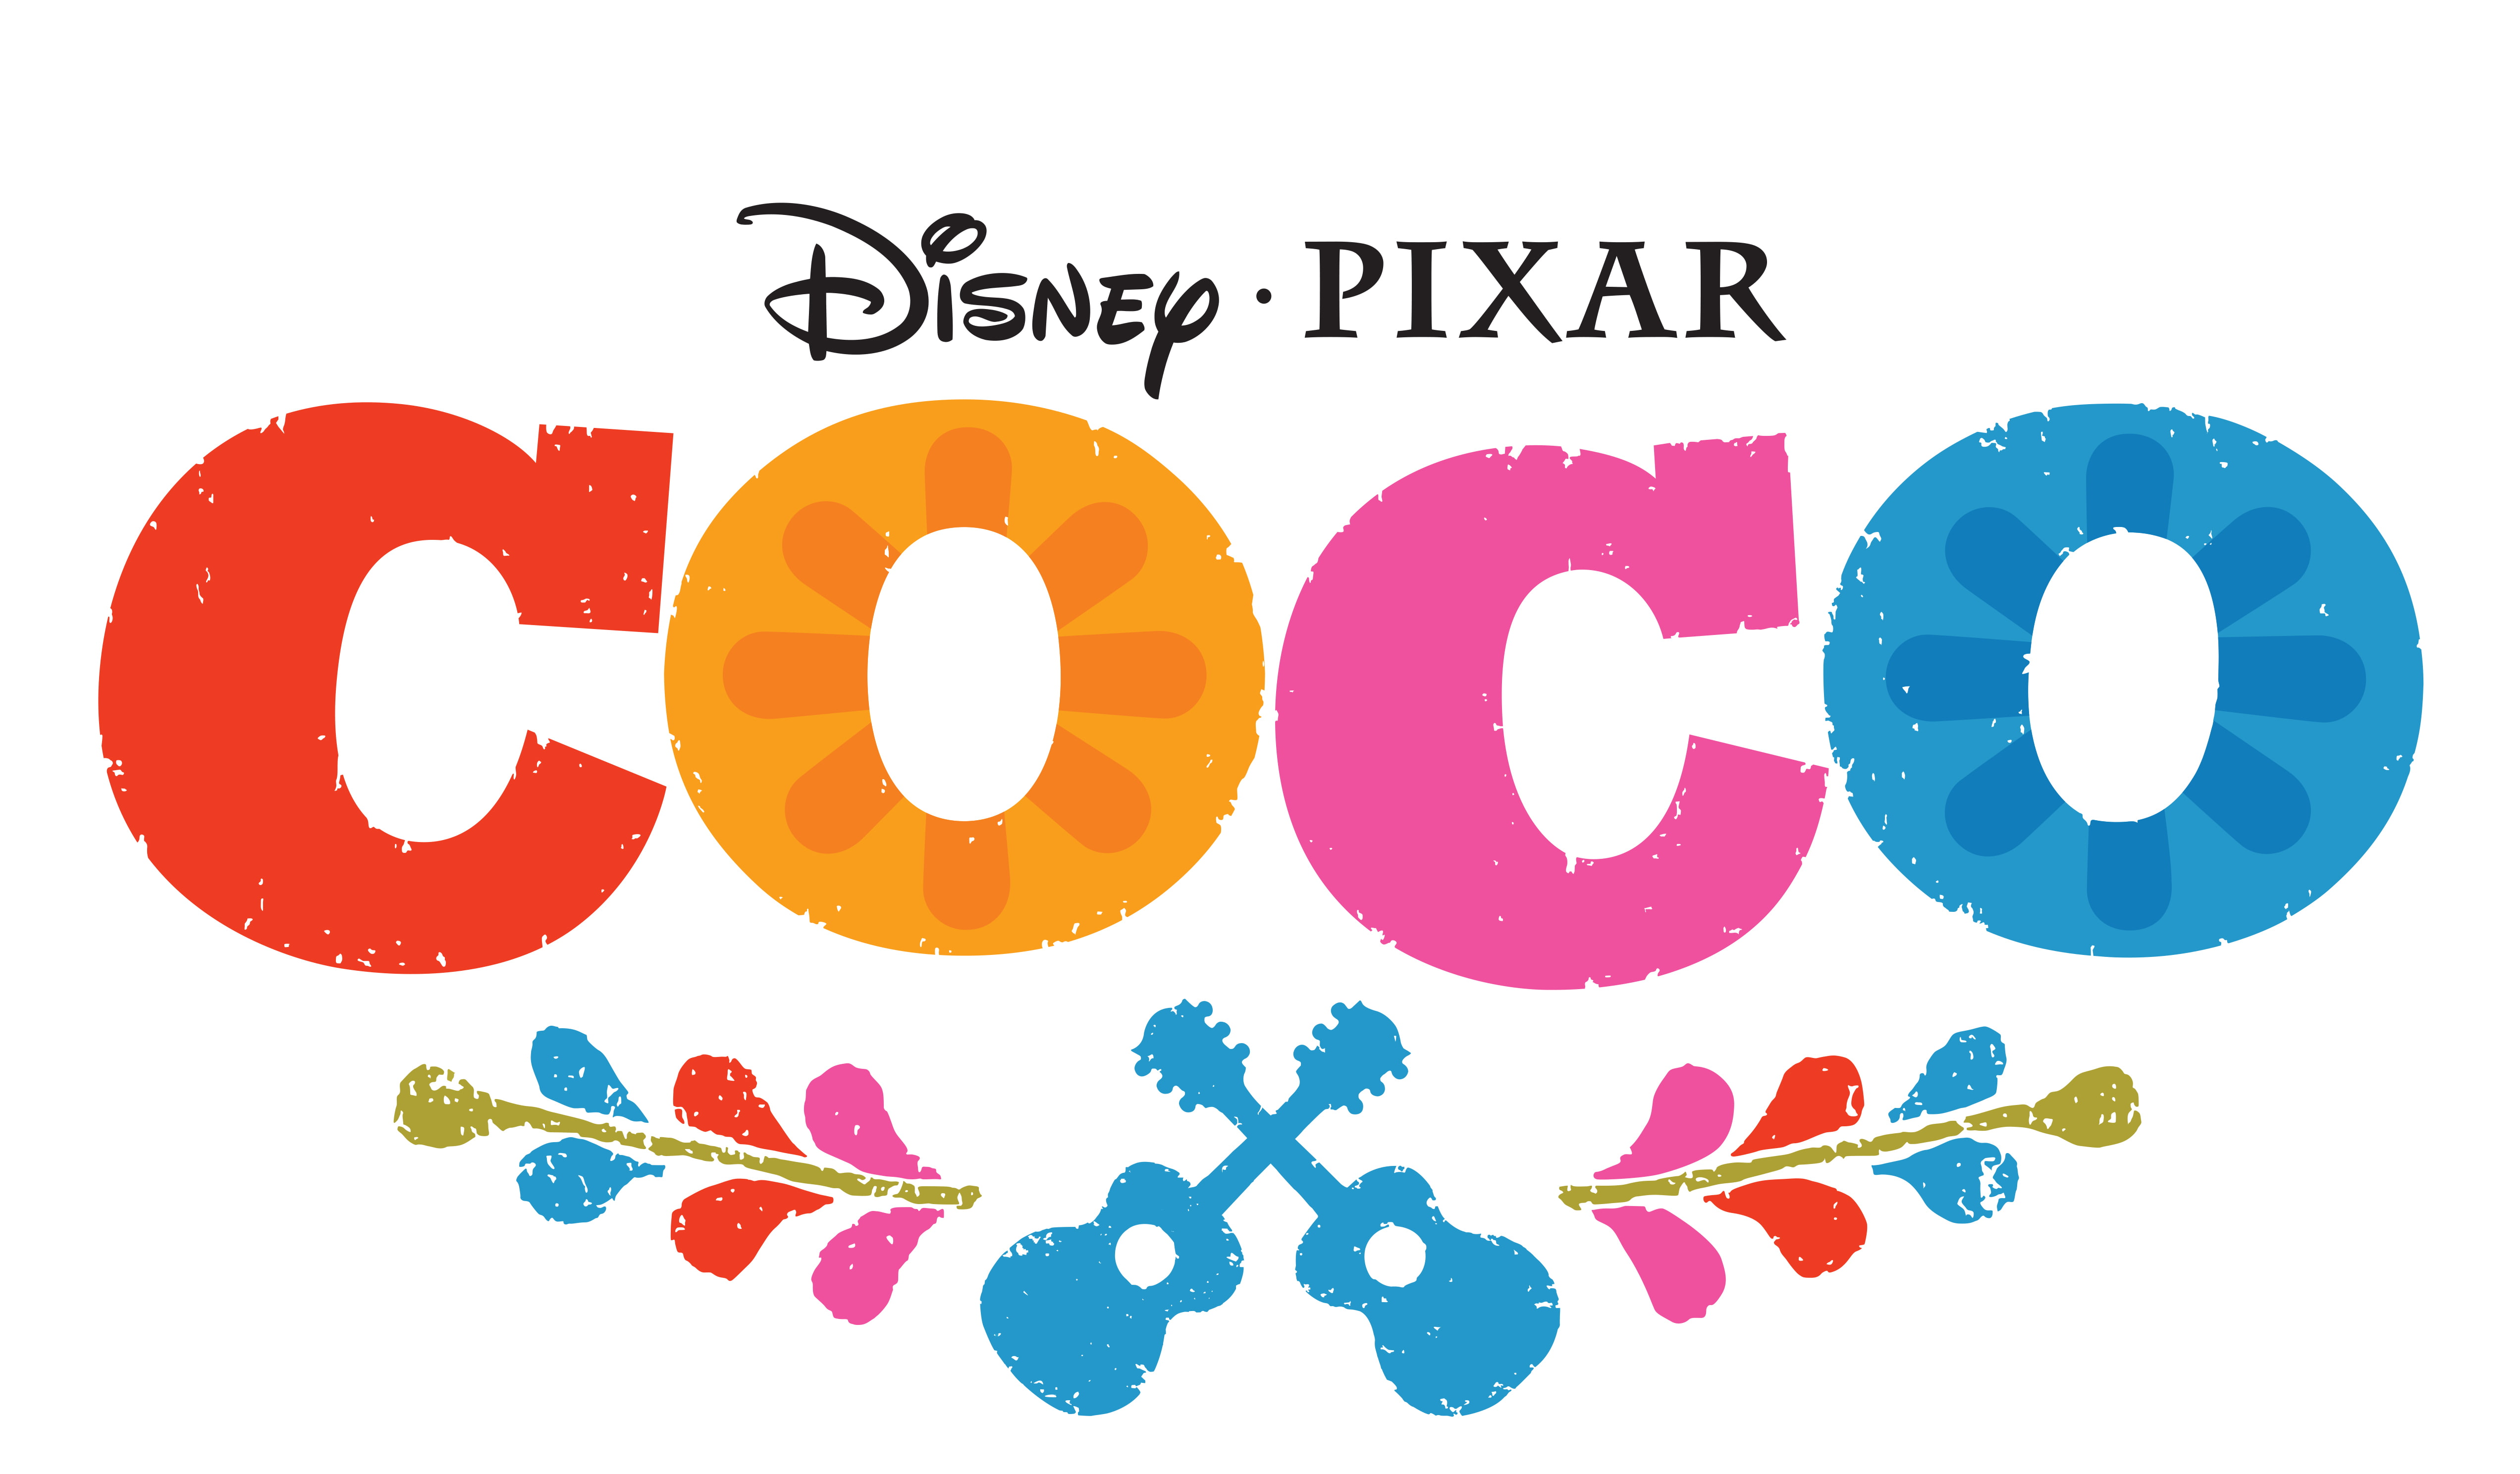 4K, Animation, 2017, Pixar, Coco, Disney, multi colored, white background